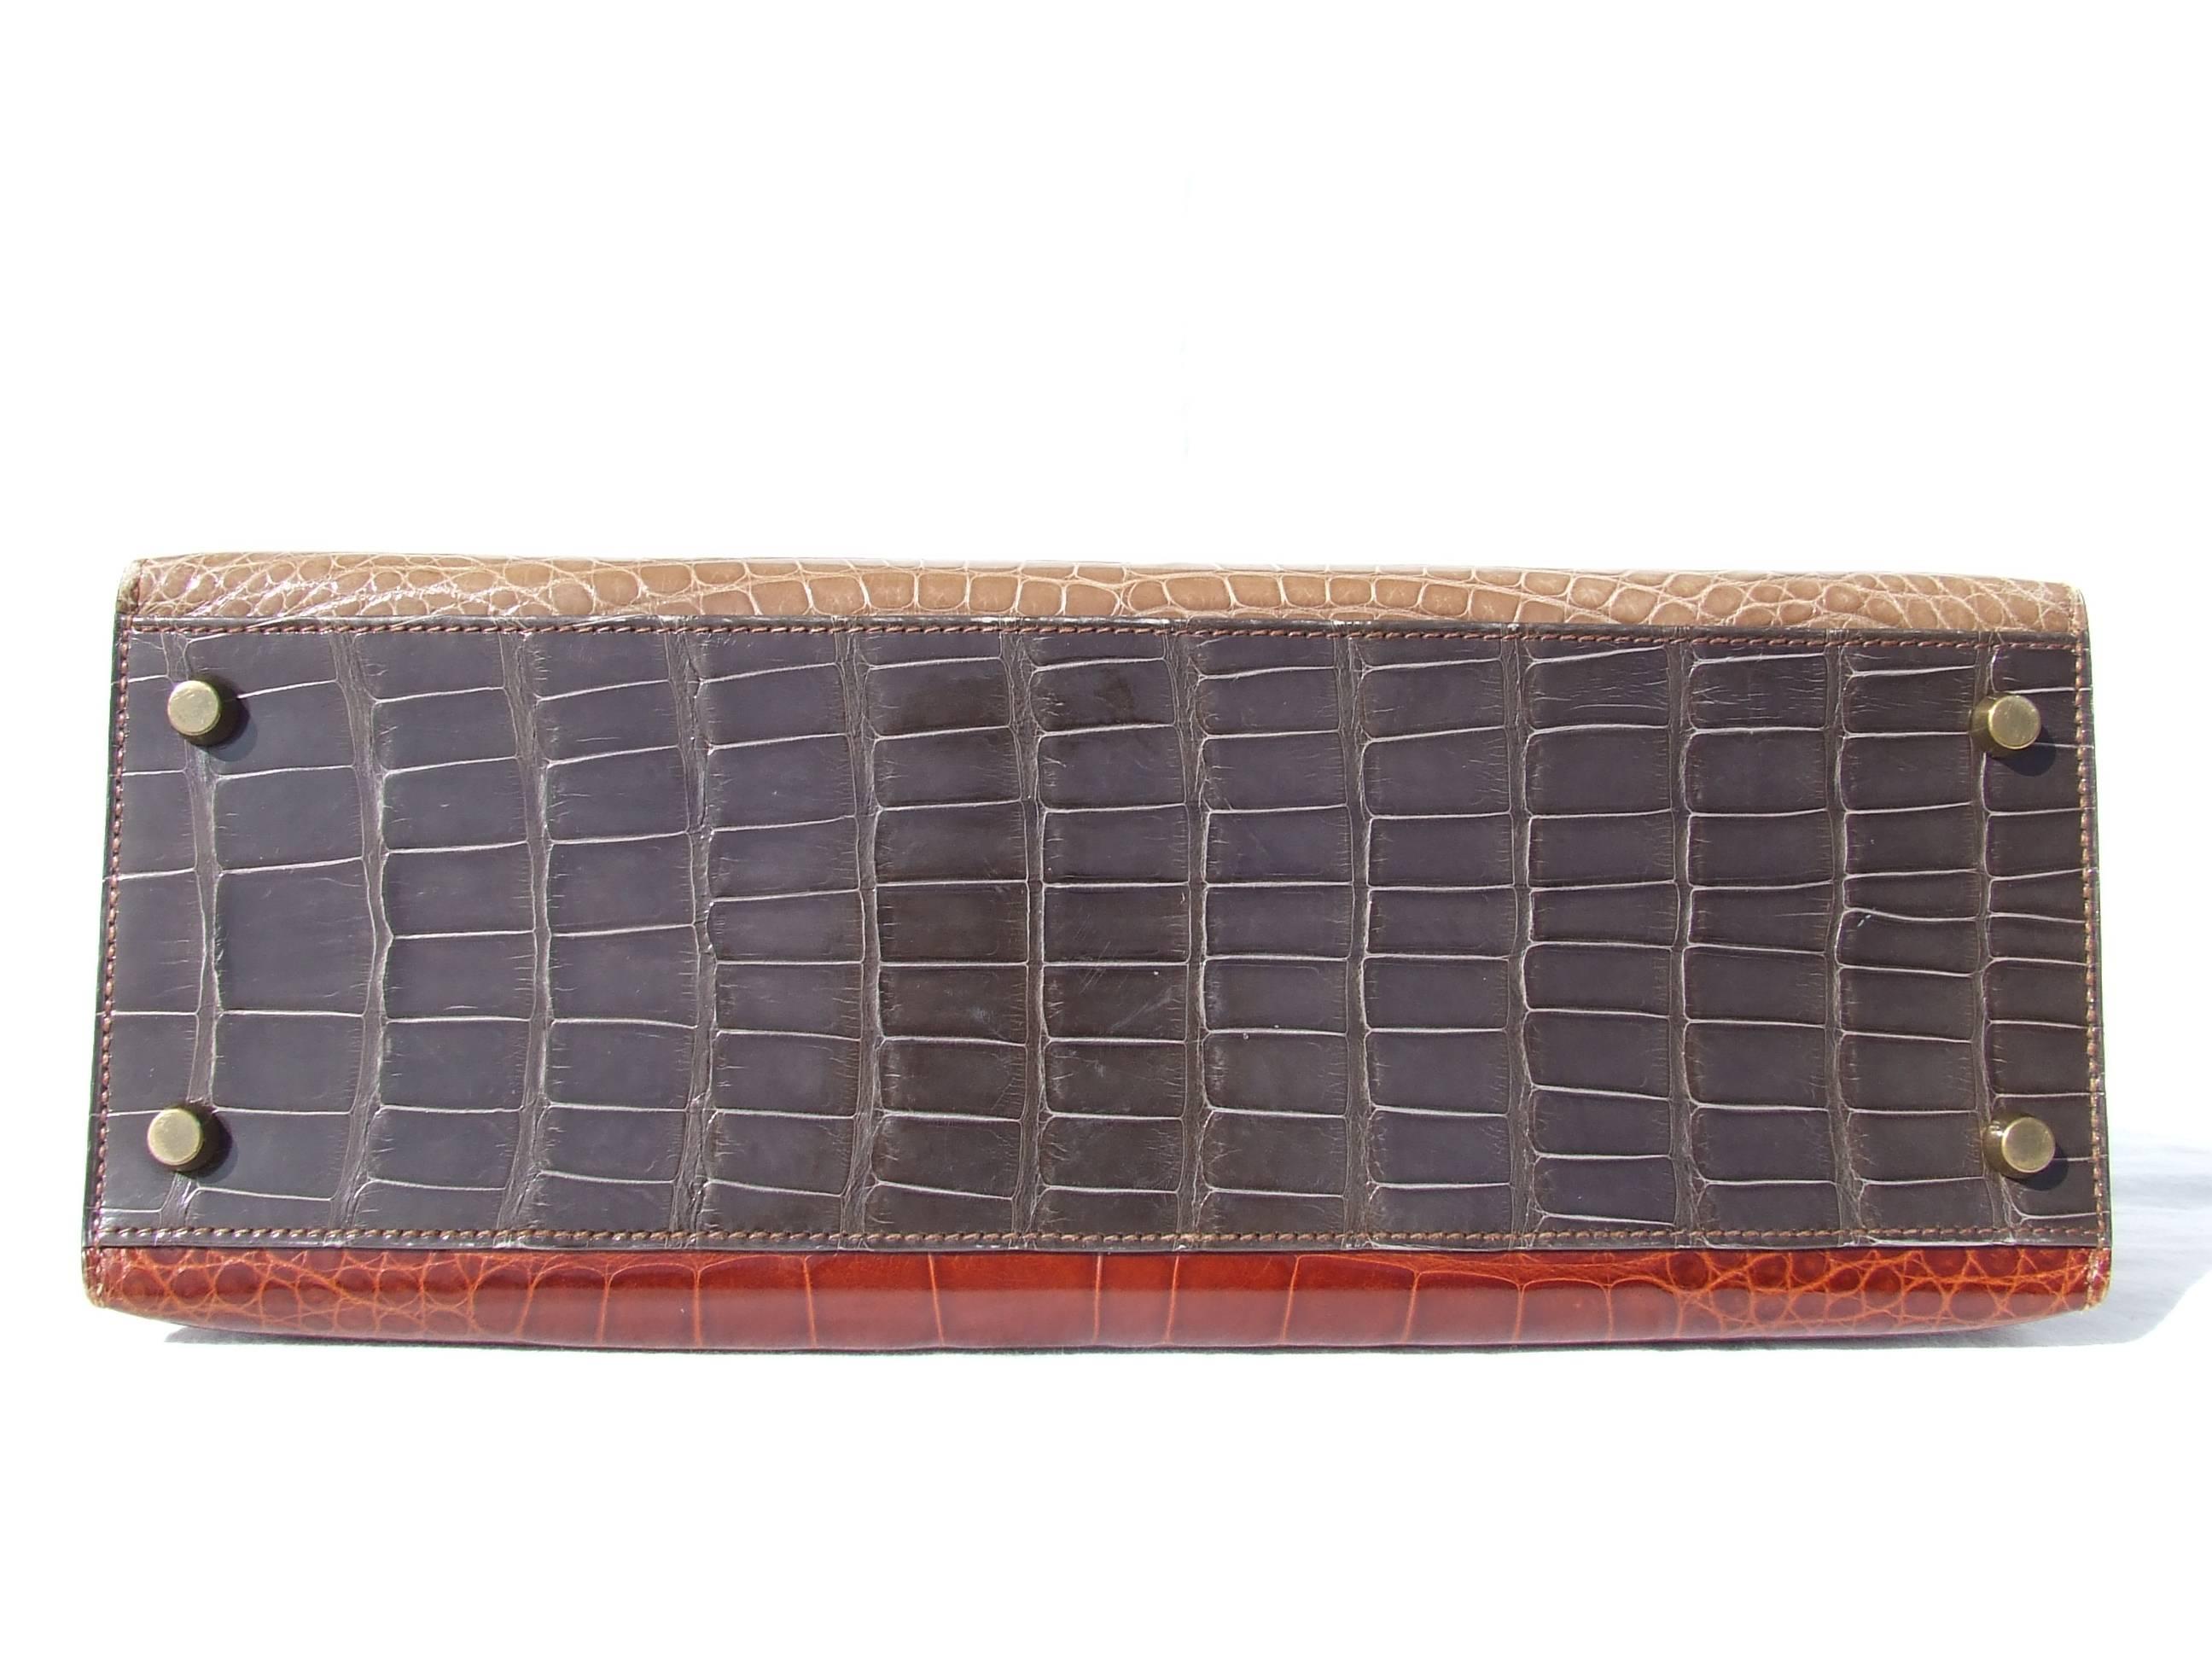 Brown Exceptional Hermès Kelly Bag Tricolor Alligator Ghw 32 cm RARE Exc Cond